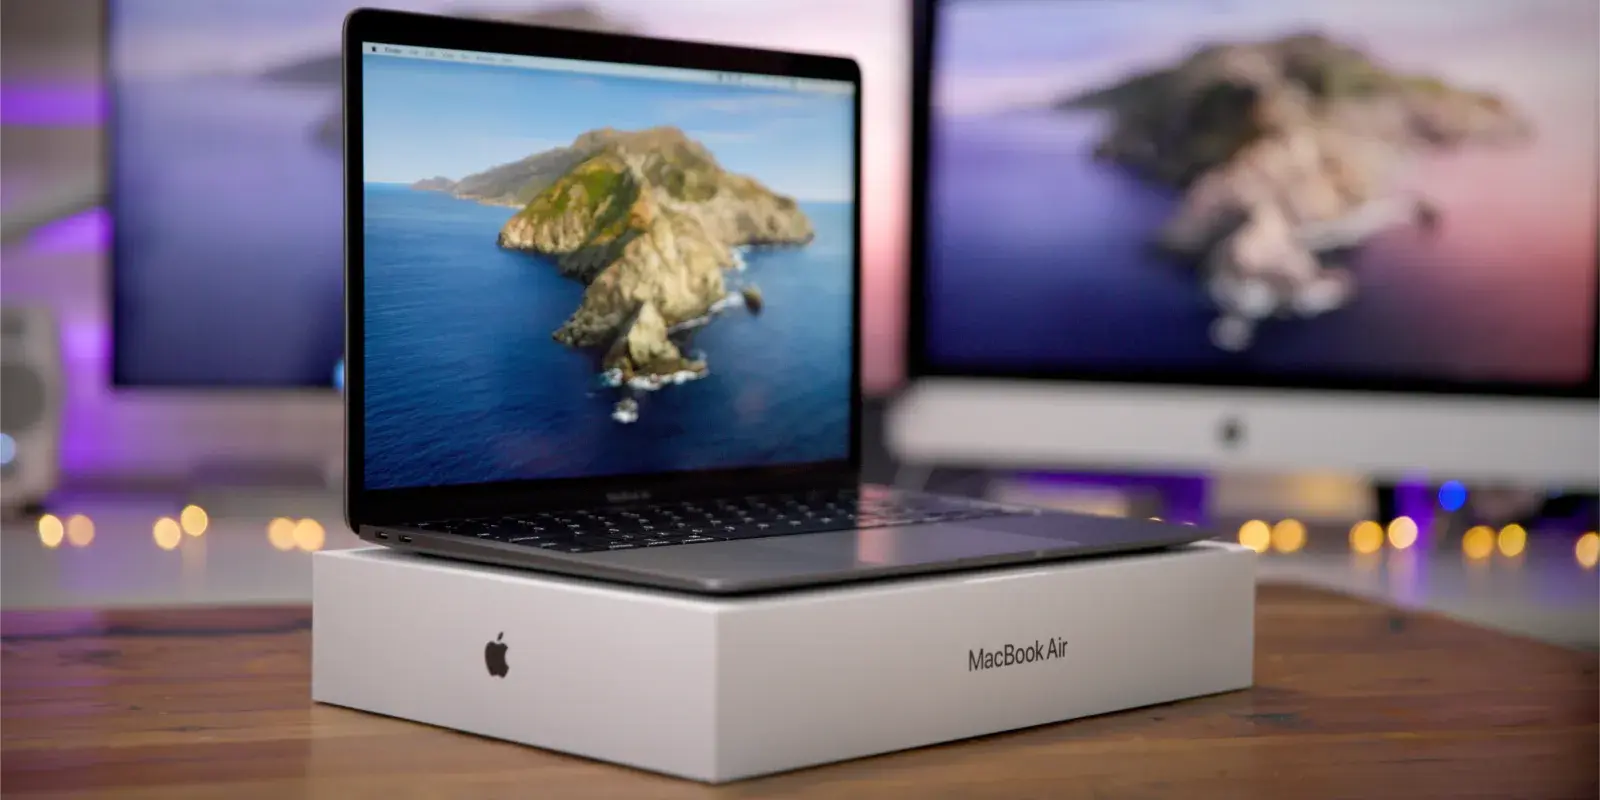 Apple MacBook Air 15 pret disponibilitate si de unde poate fi cumparat 3